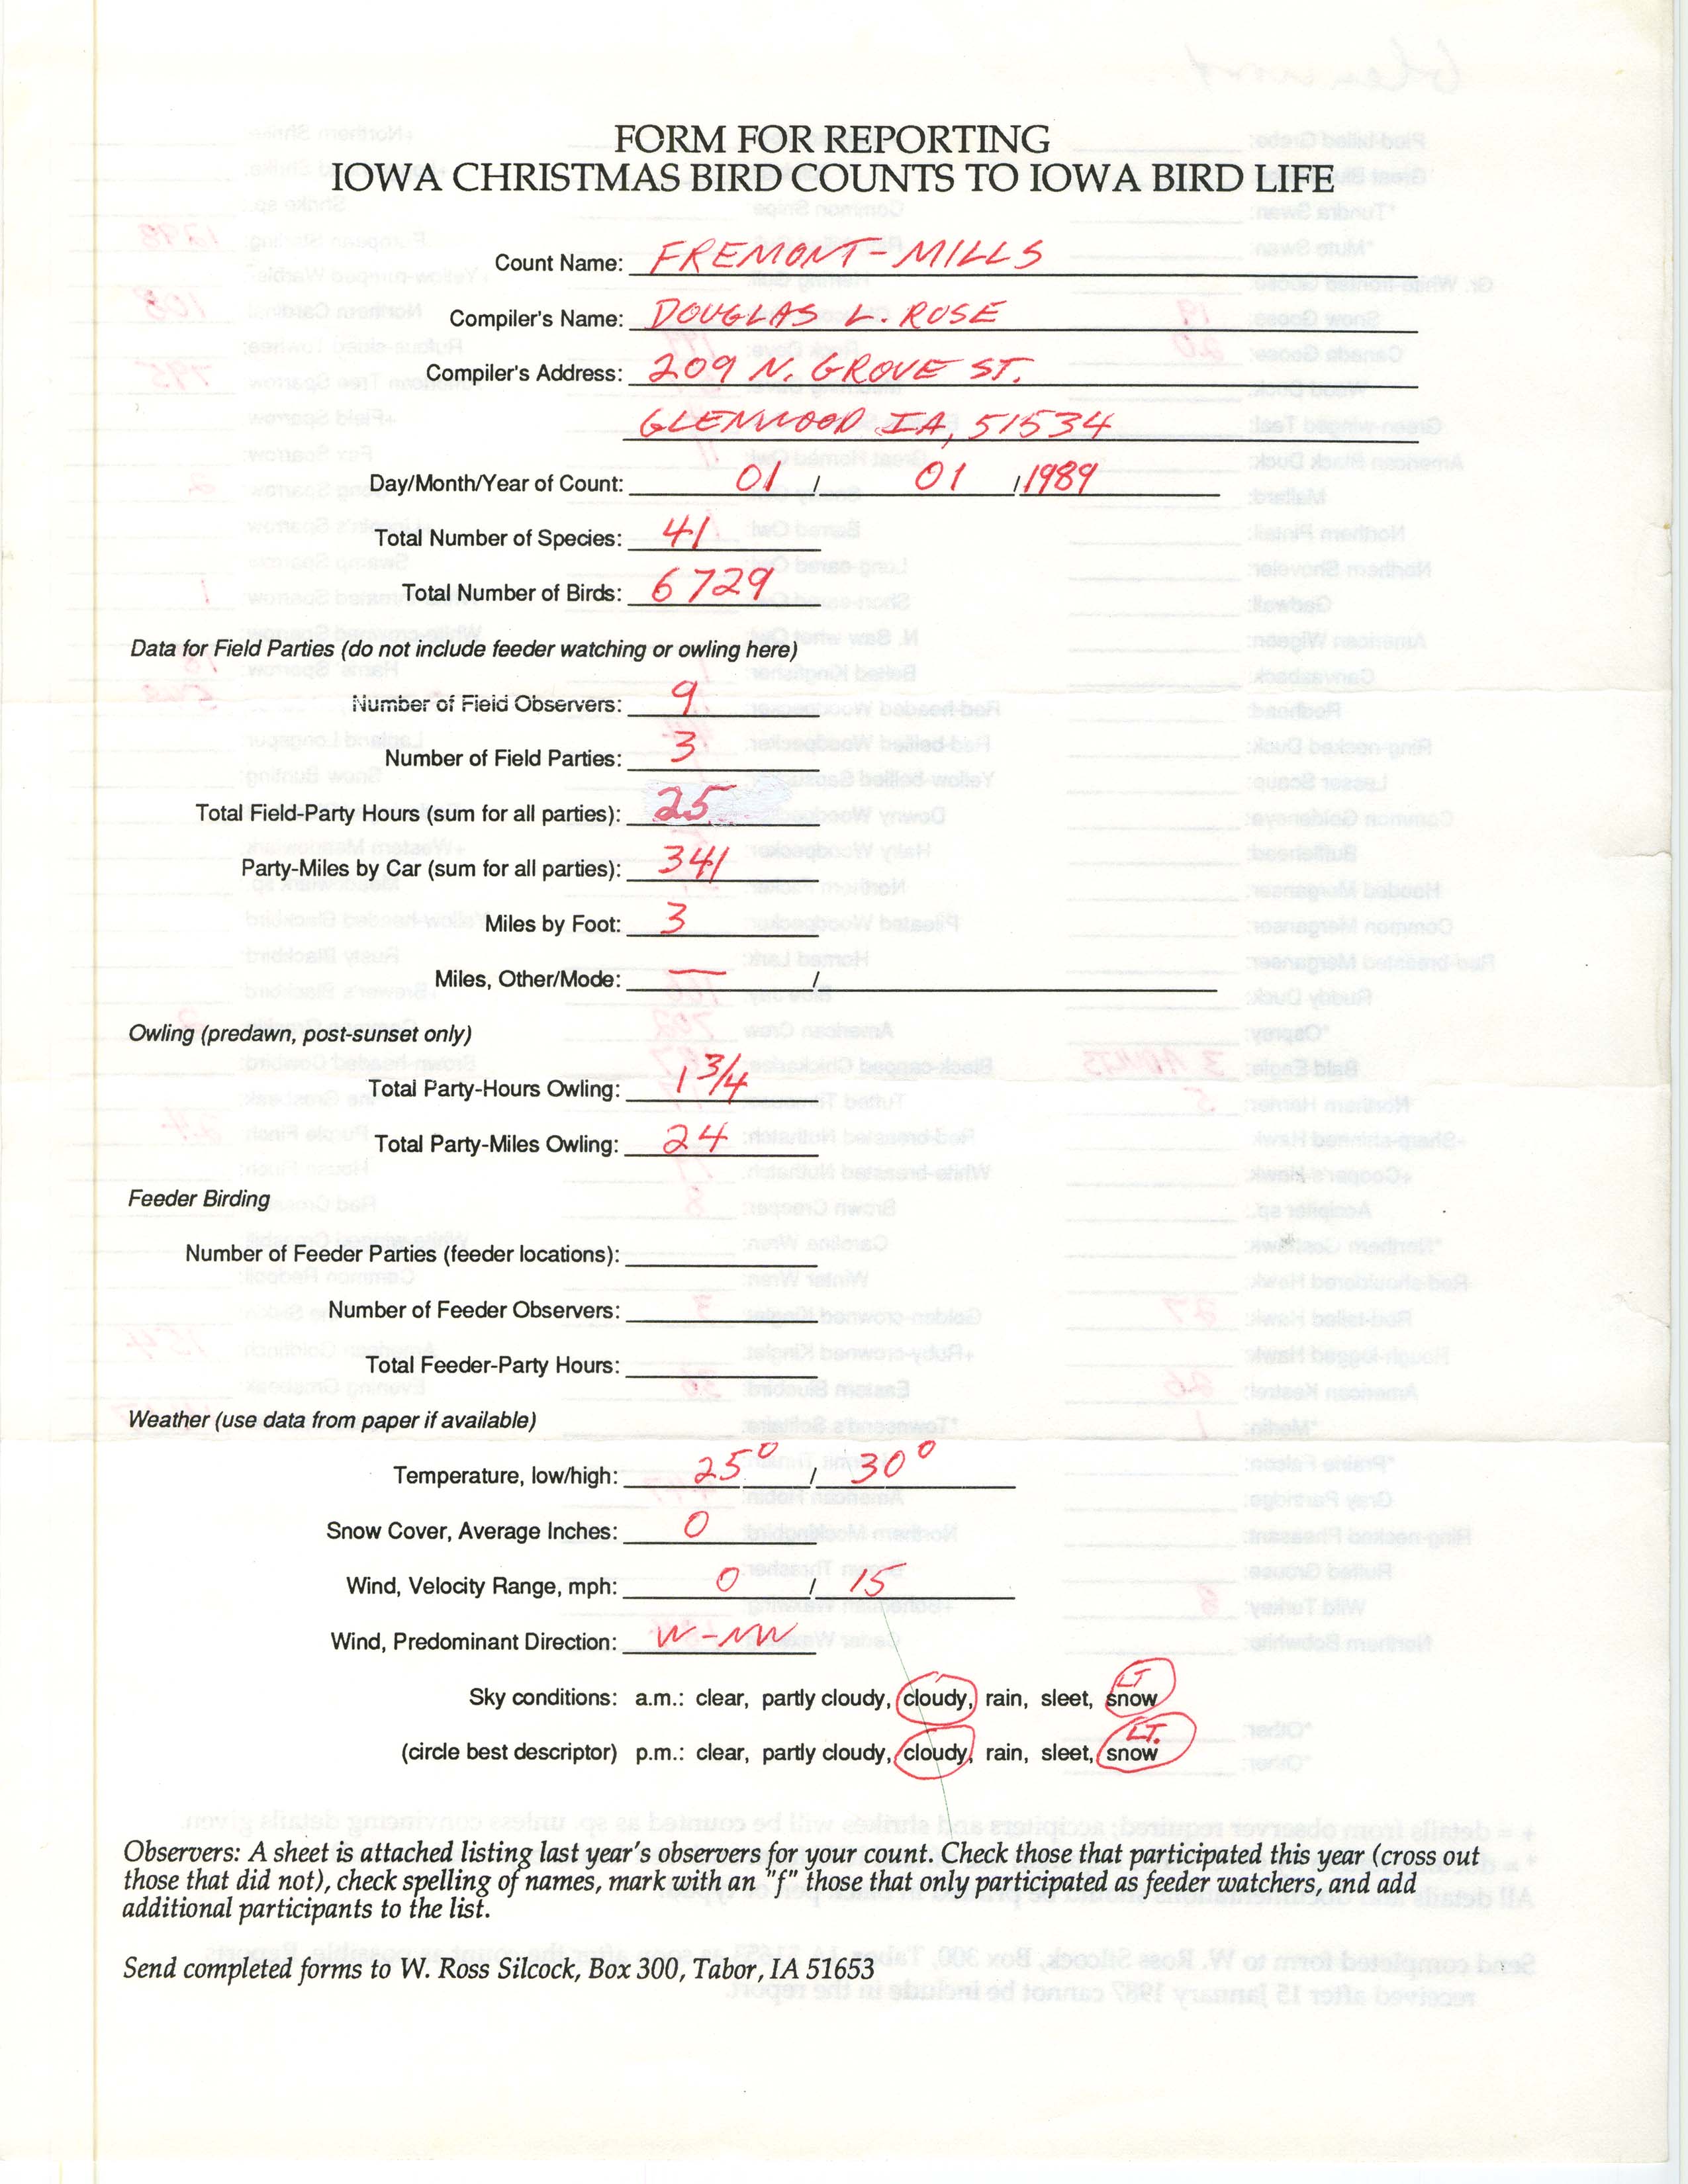 Form for reporting Iowa Christmas bird counts to Iowa Bird Life, Douglas Rose, January 1, 1989